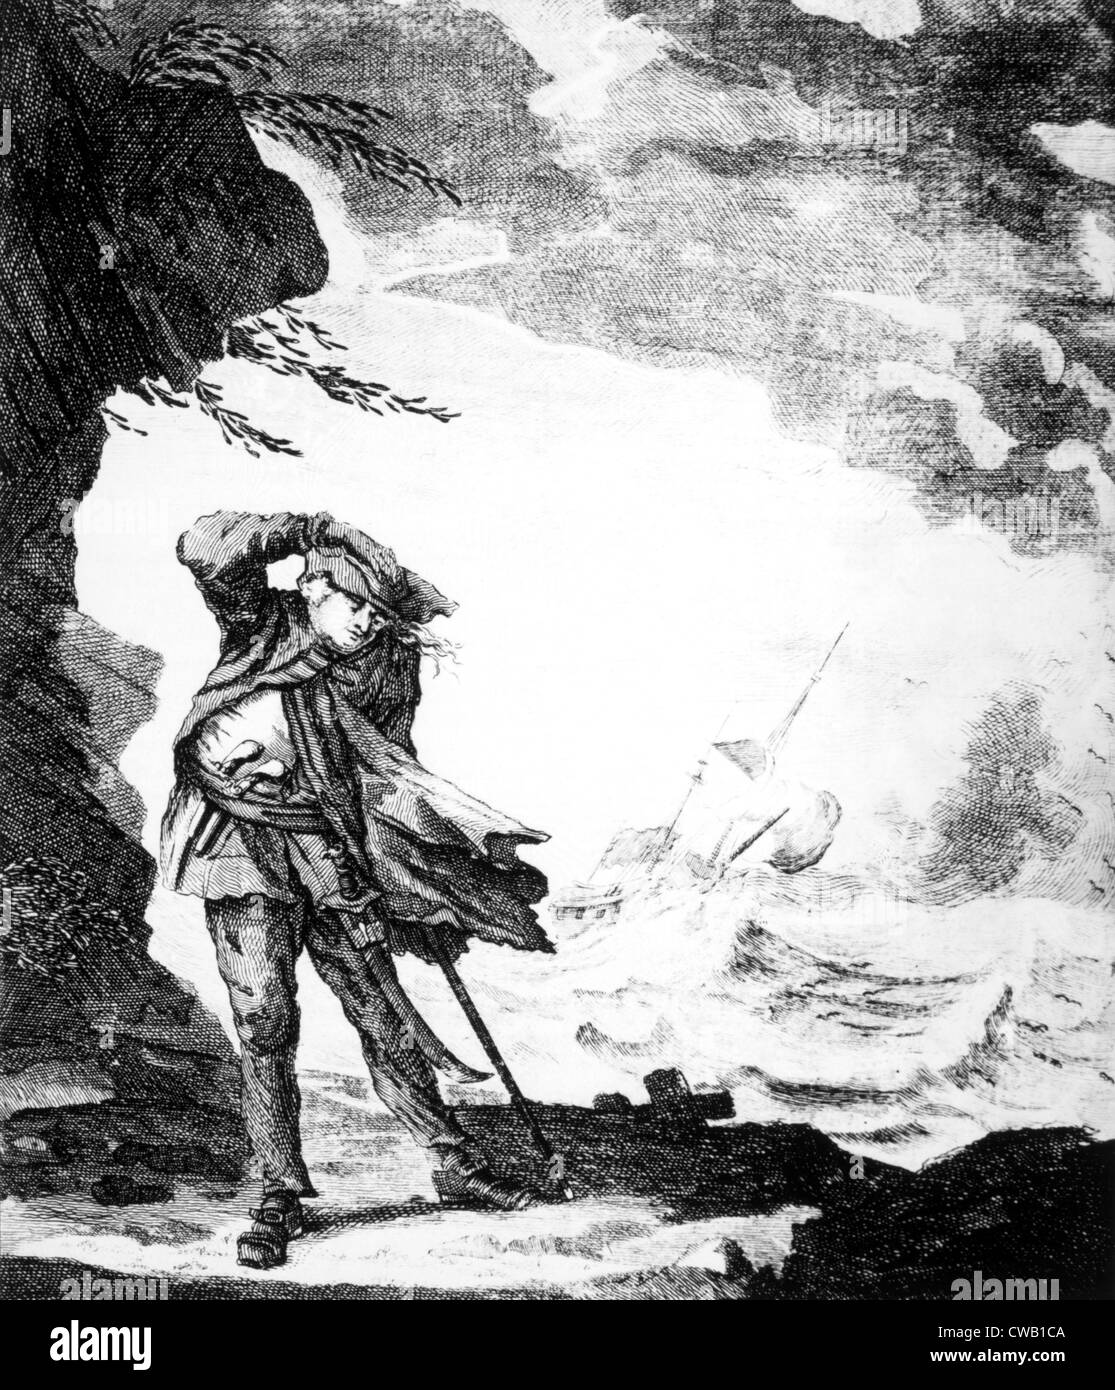 Edward Low, (aka Edward Lowe), English pirate shown on shore watching a ship foundering in a hurricane, c. 1720. Stock Photo